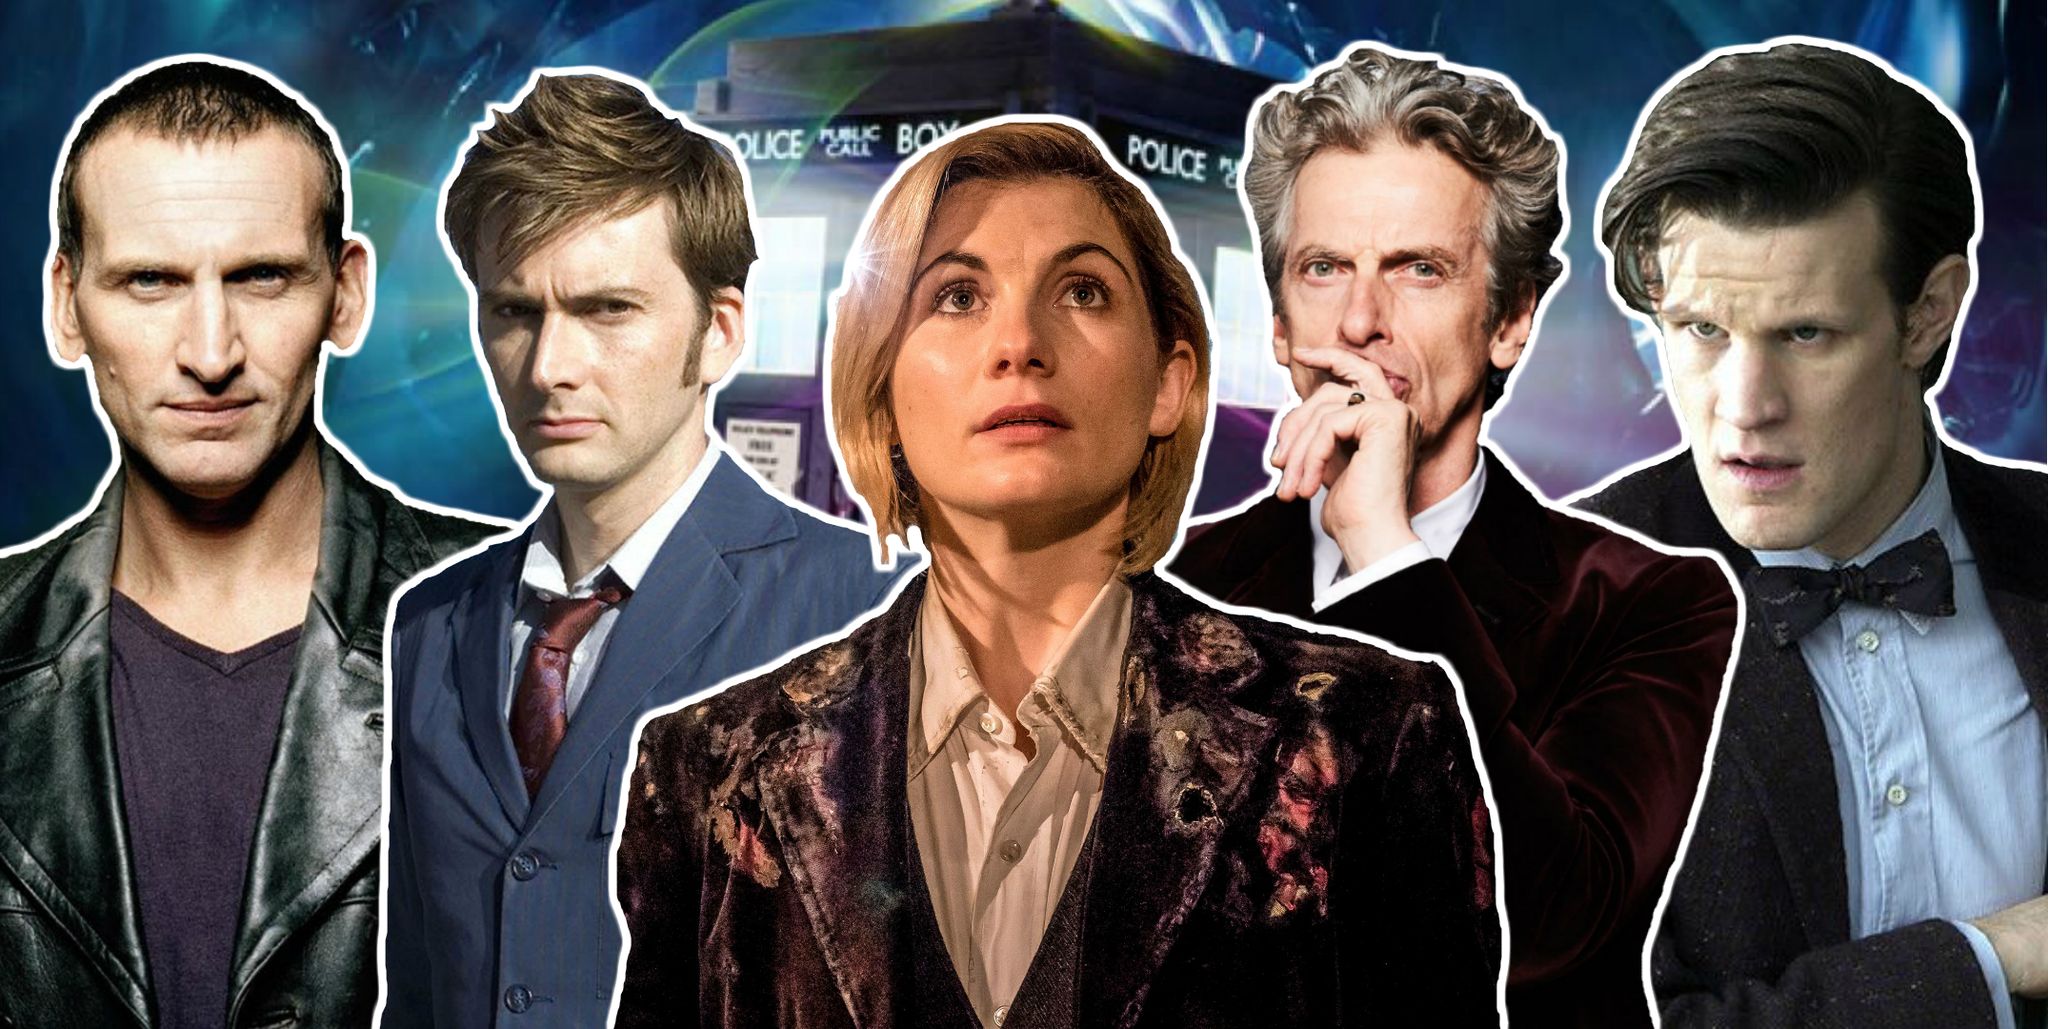 Doctor Who The Pilot (TV Episode 2017) - IMDb